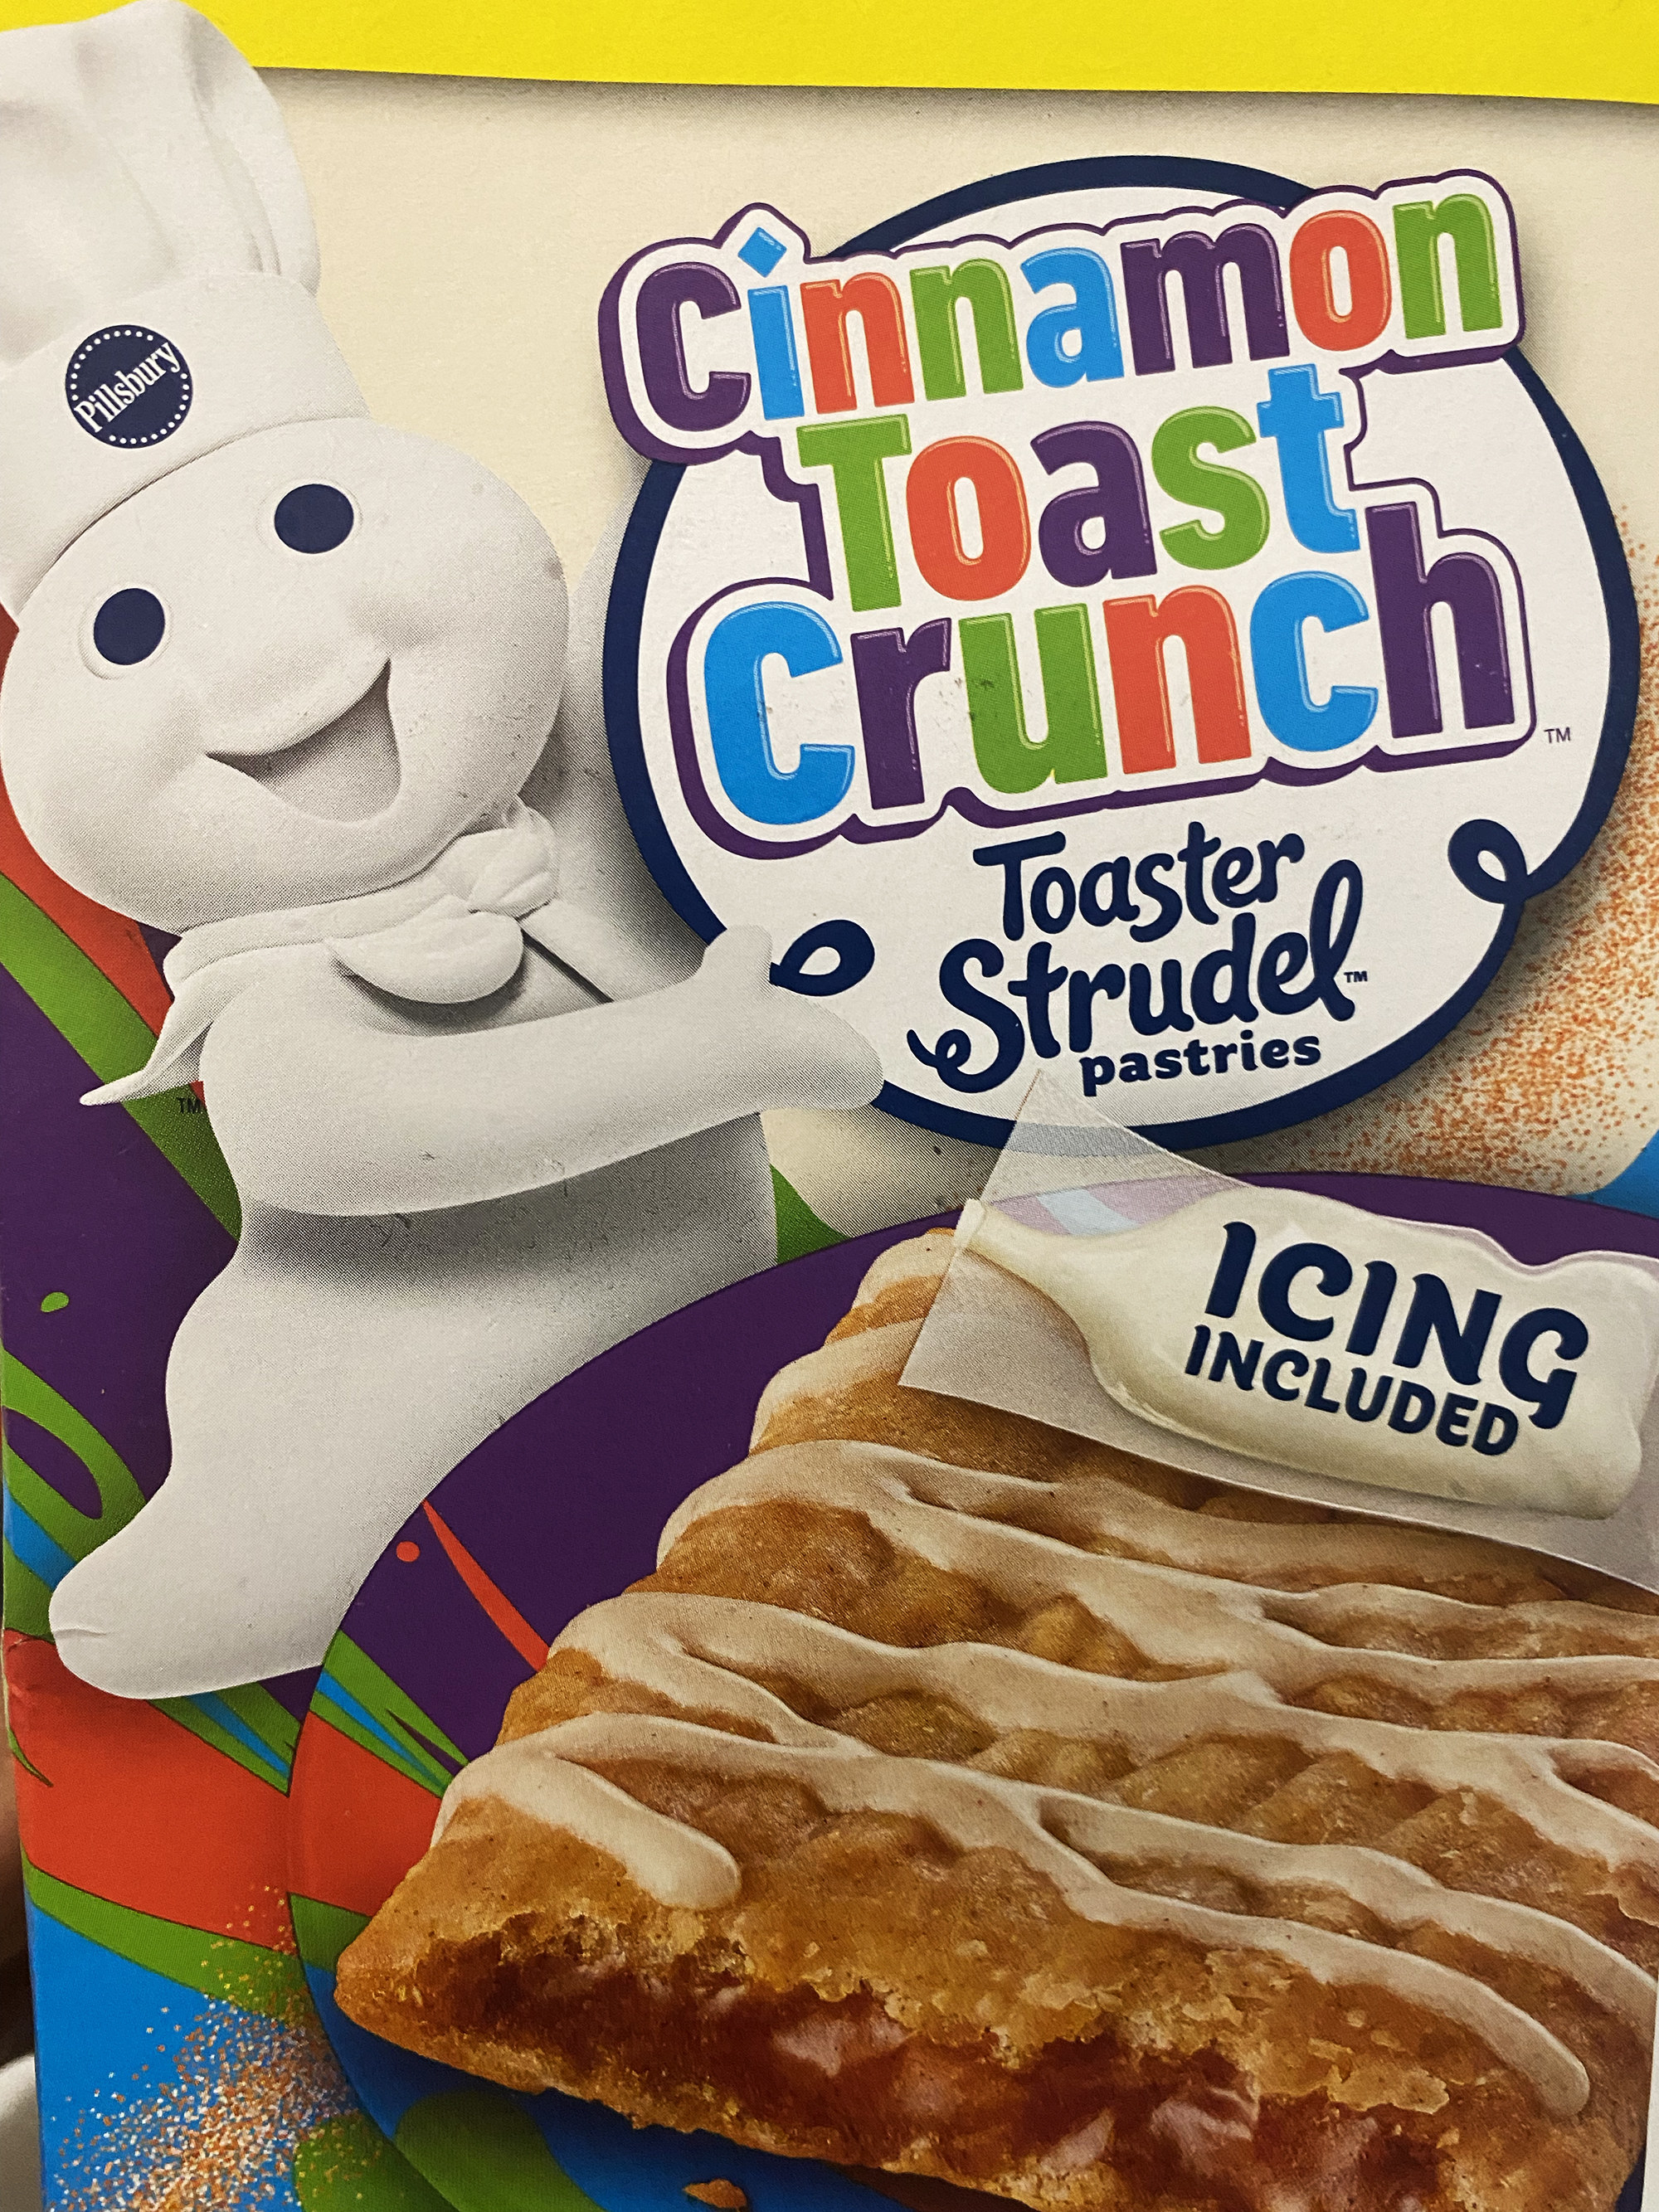 Cinnamon Toast Crunch Toaster Strudel box